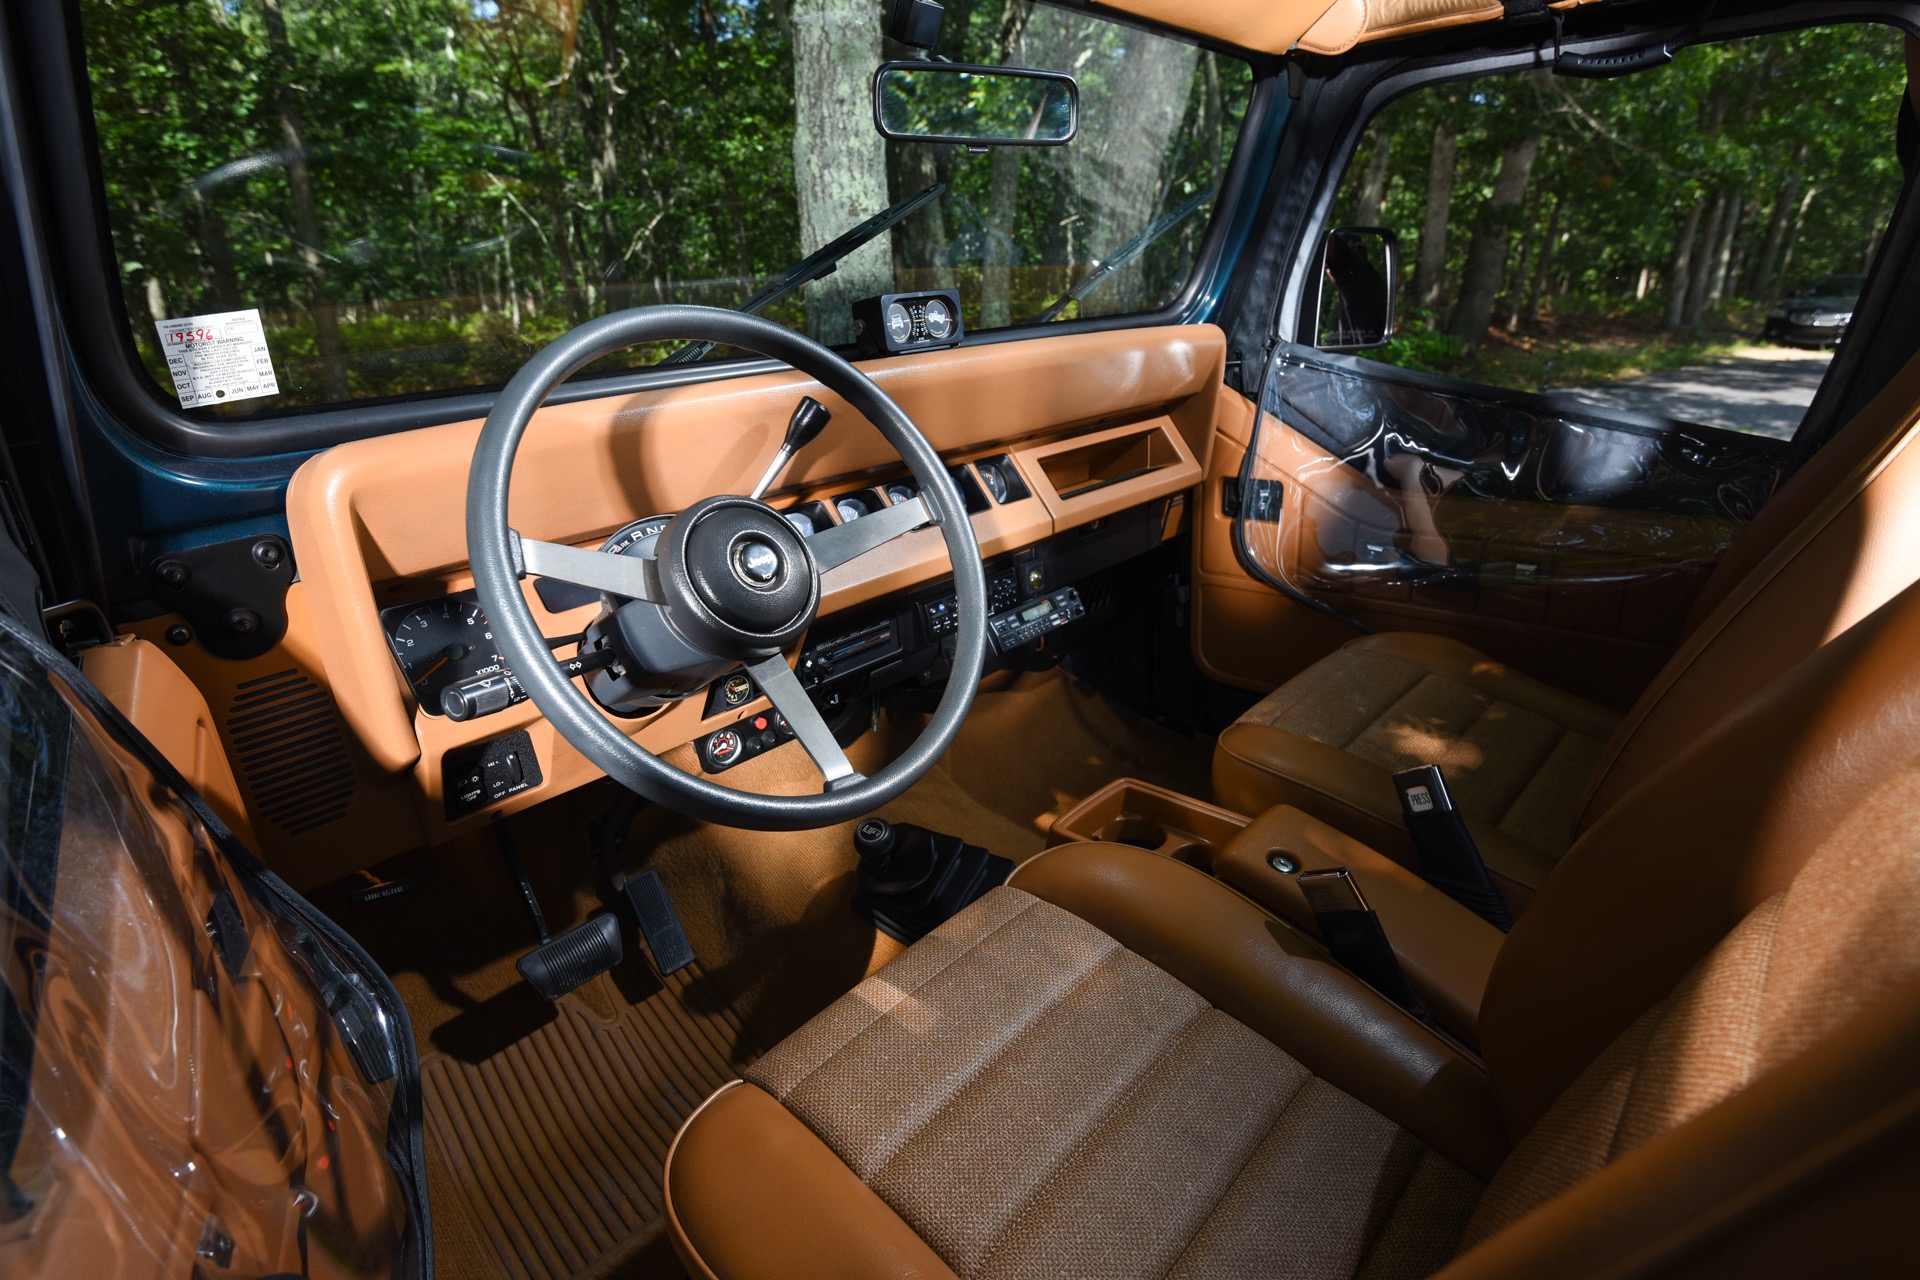 Used 1995 Jeep Wrangler Rio Grande For Sale (Sold) | Ryan Friedman Motor  Cars LLC Stock #50